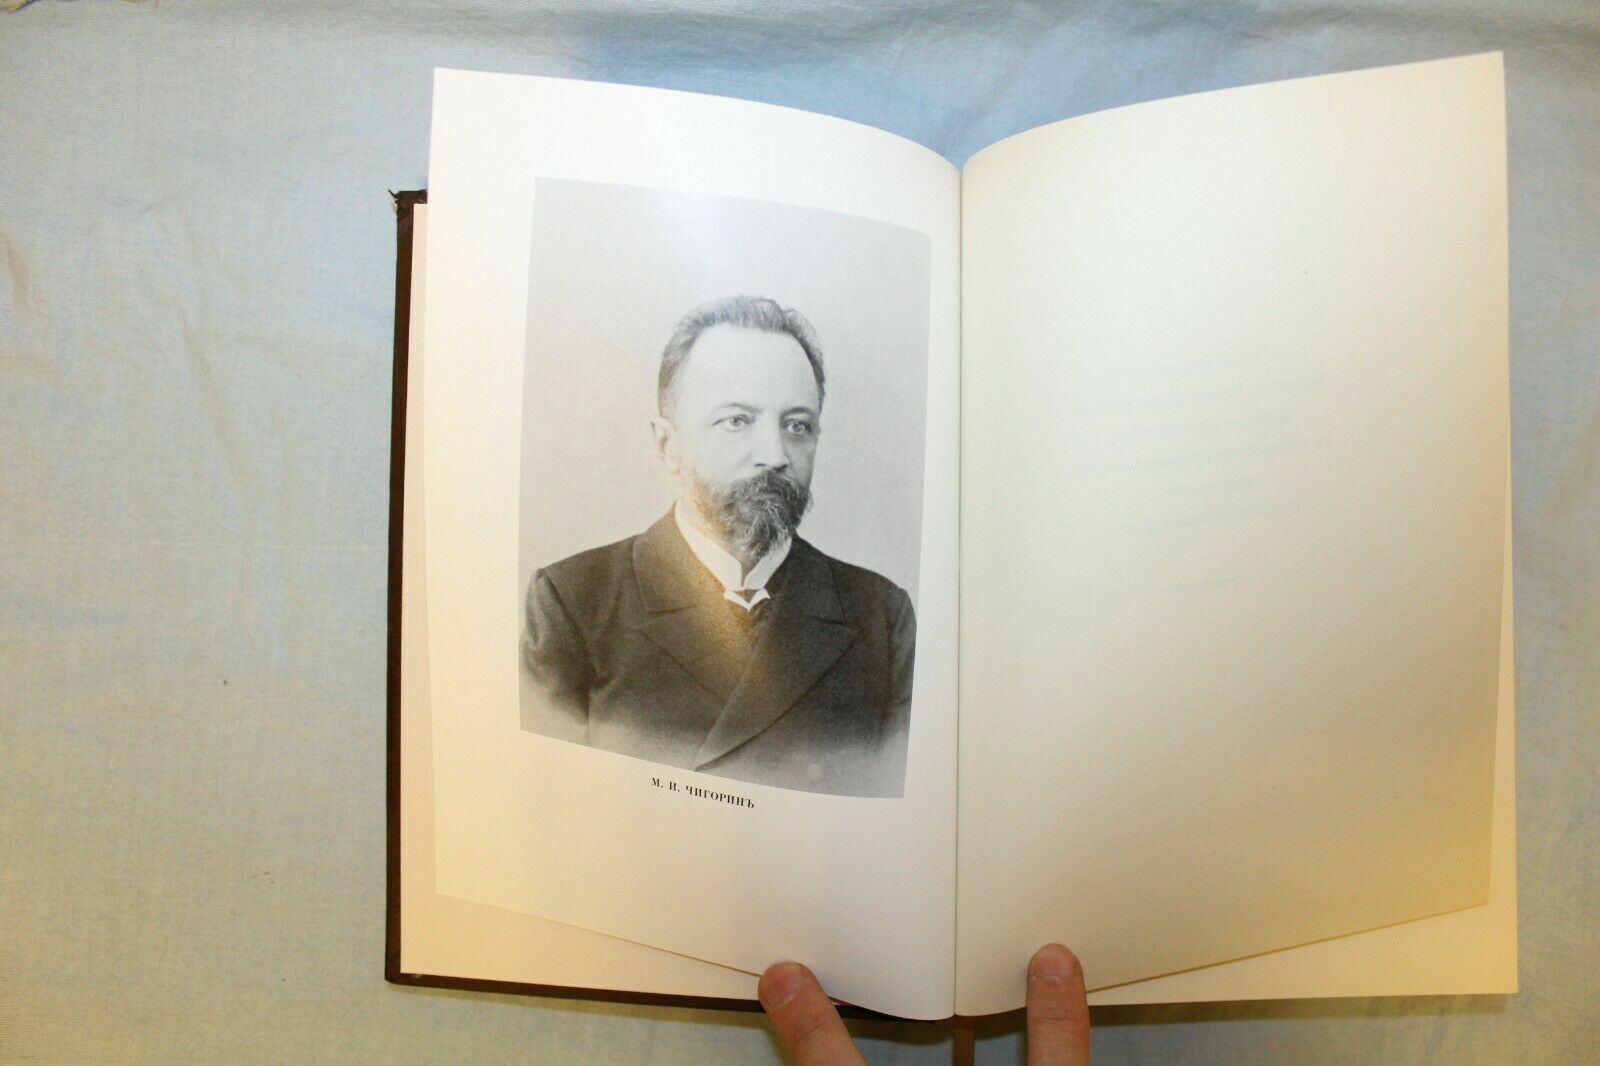 11237.Chigorin's CHESS SHEET 1876-1881. SET OF 3 VOLUMES. FACSIMILE GIFT EDITION 2019